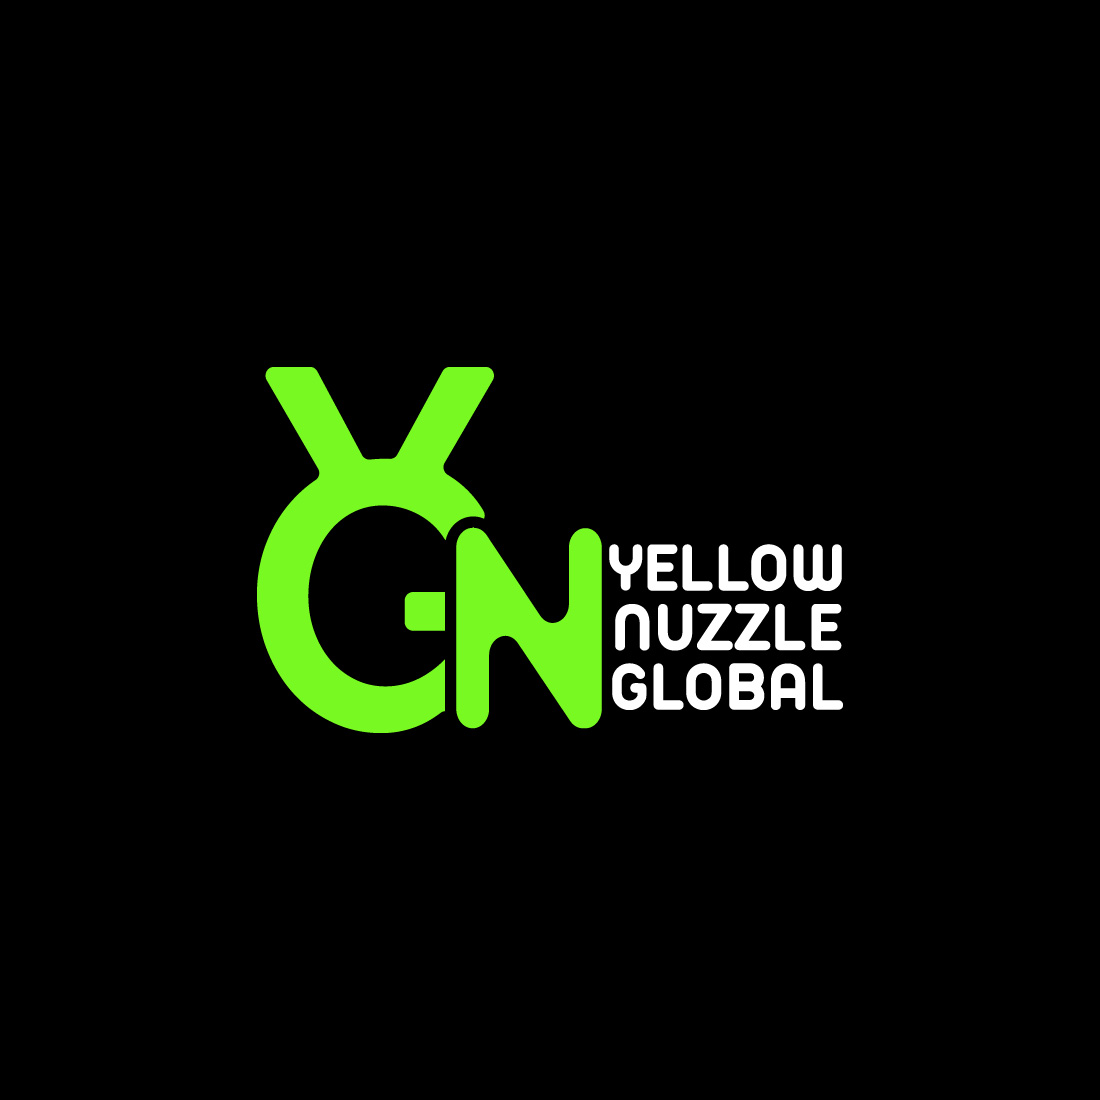 yellow nuzzle global 00 01 148